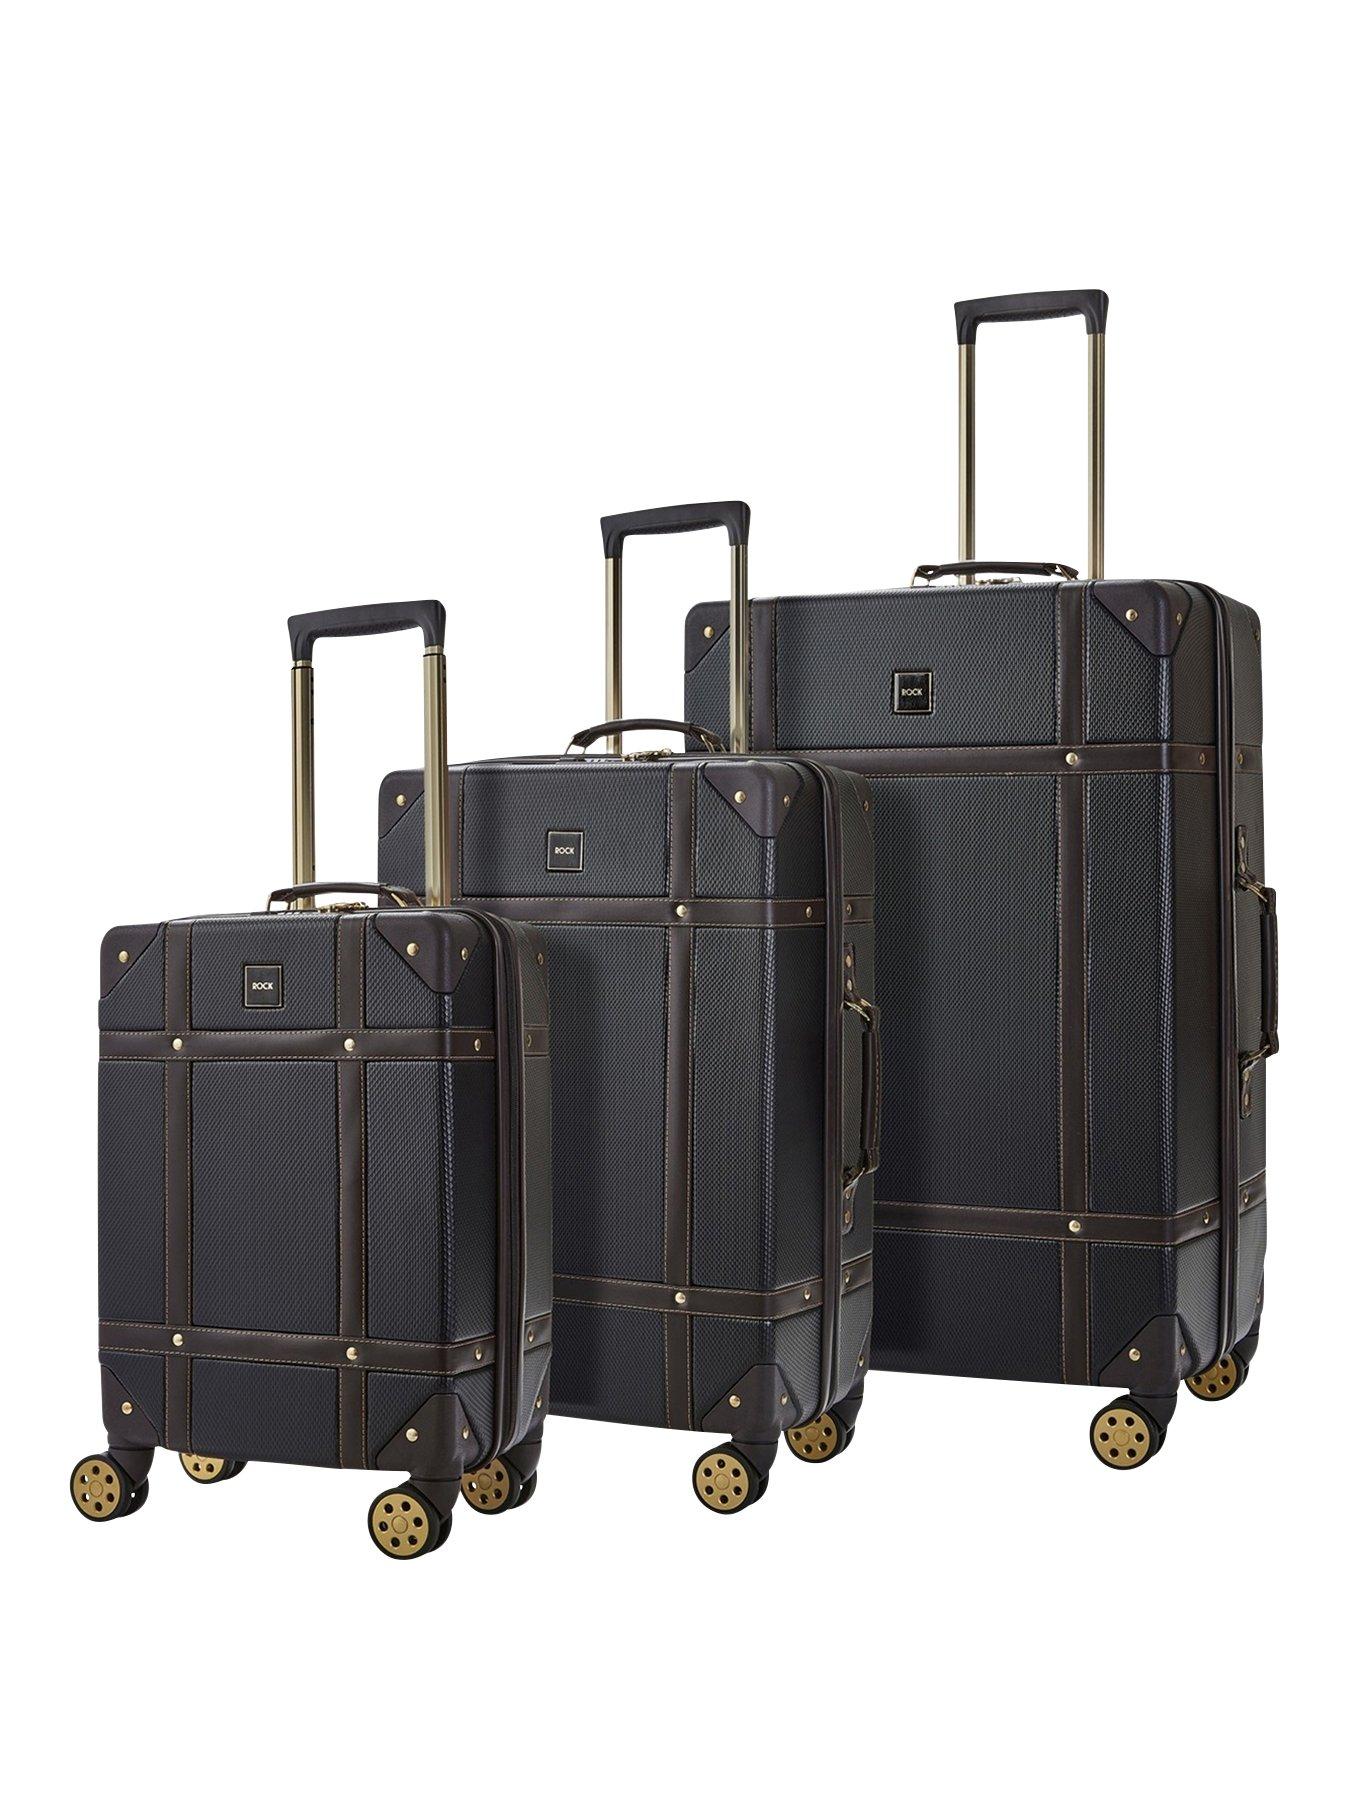 Rock Luggage Vintage 8-Wheel Suitcases 3 piece Set - Black | very.co.uk